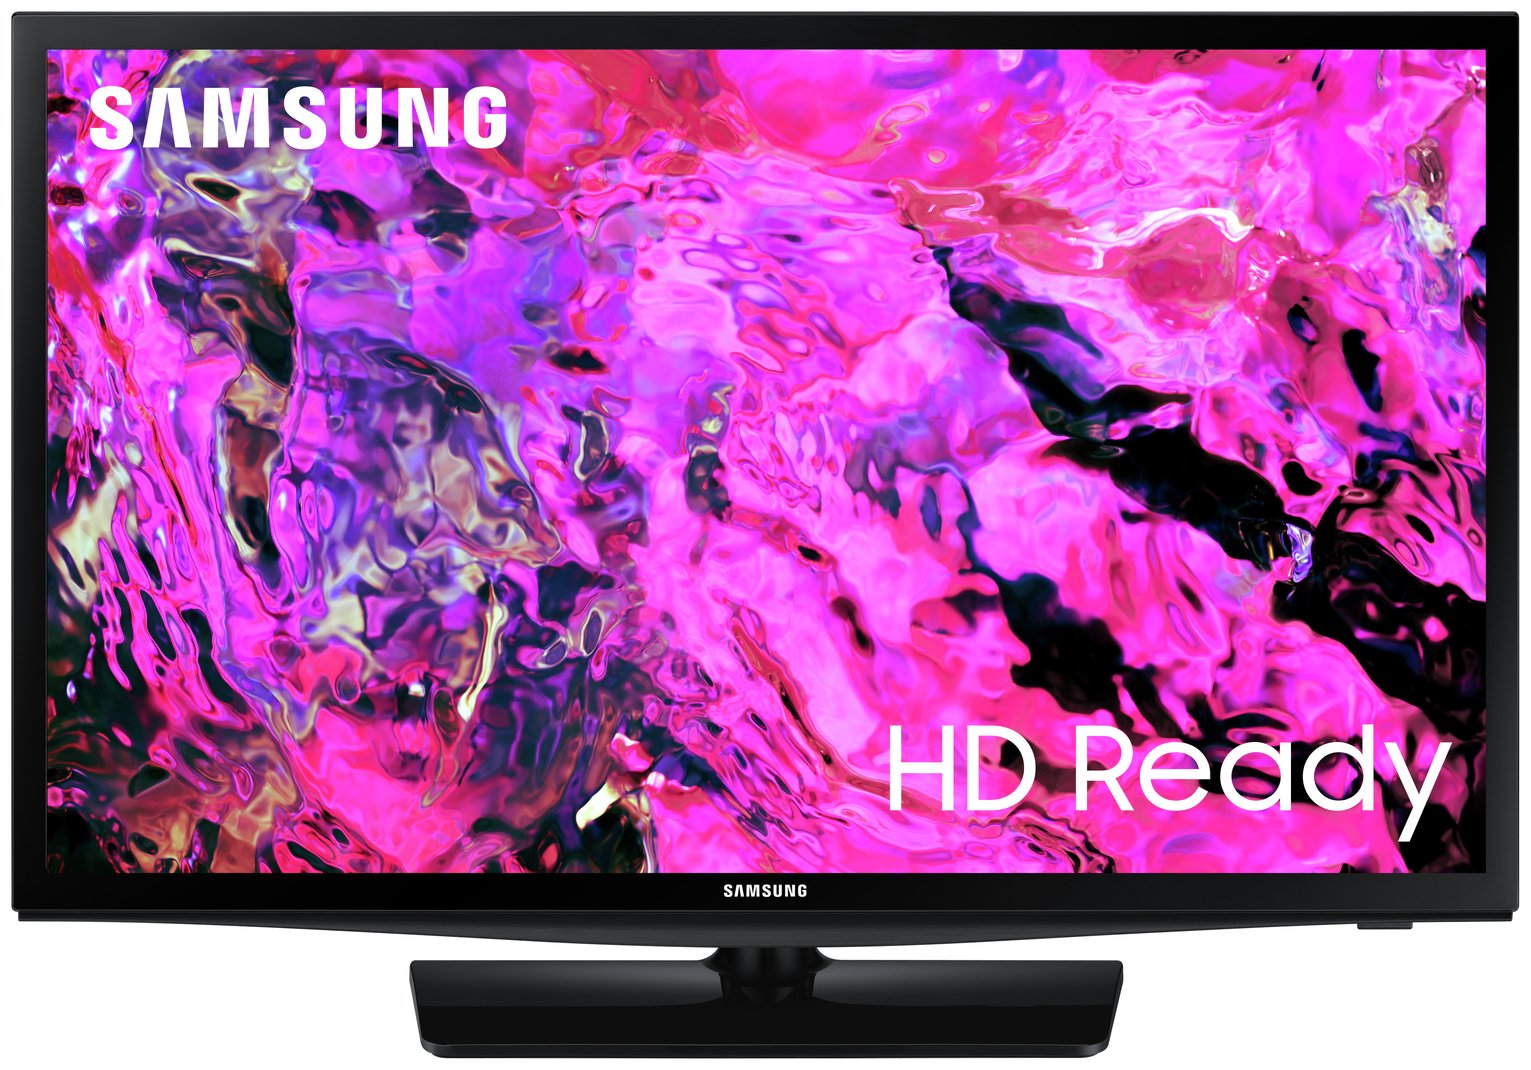 Samsung 24 Inch UE24N4300A Smart HD Ready HDR LED TV